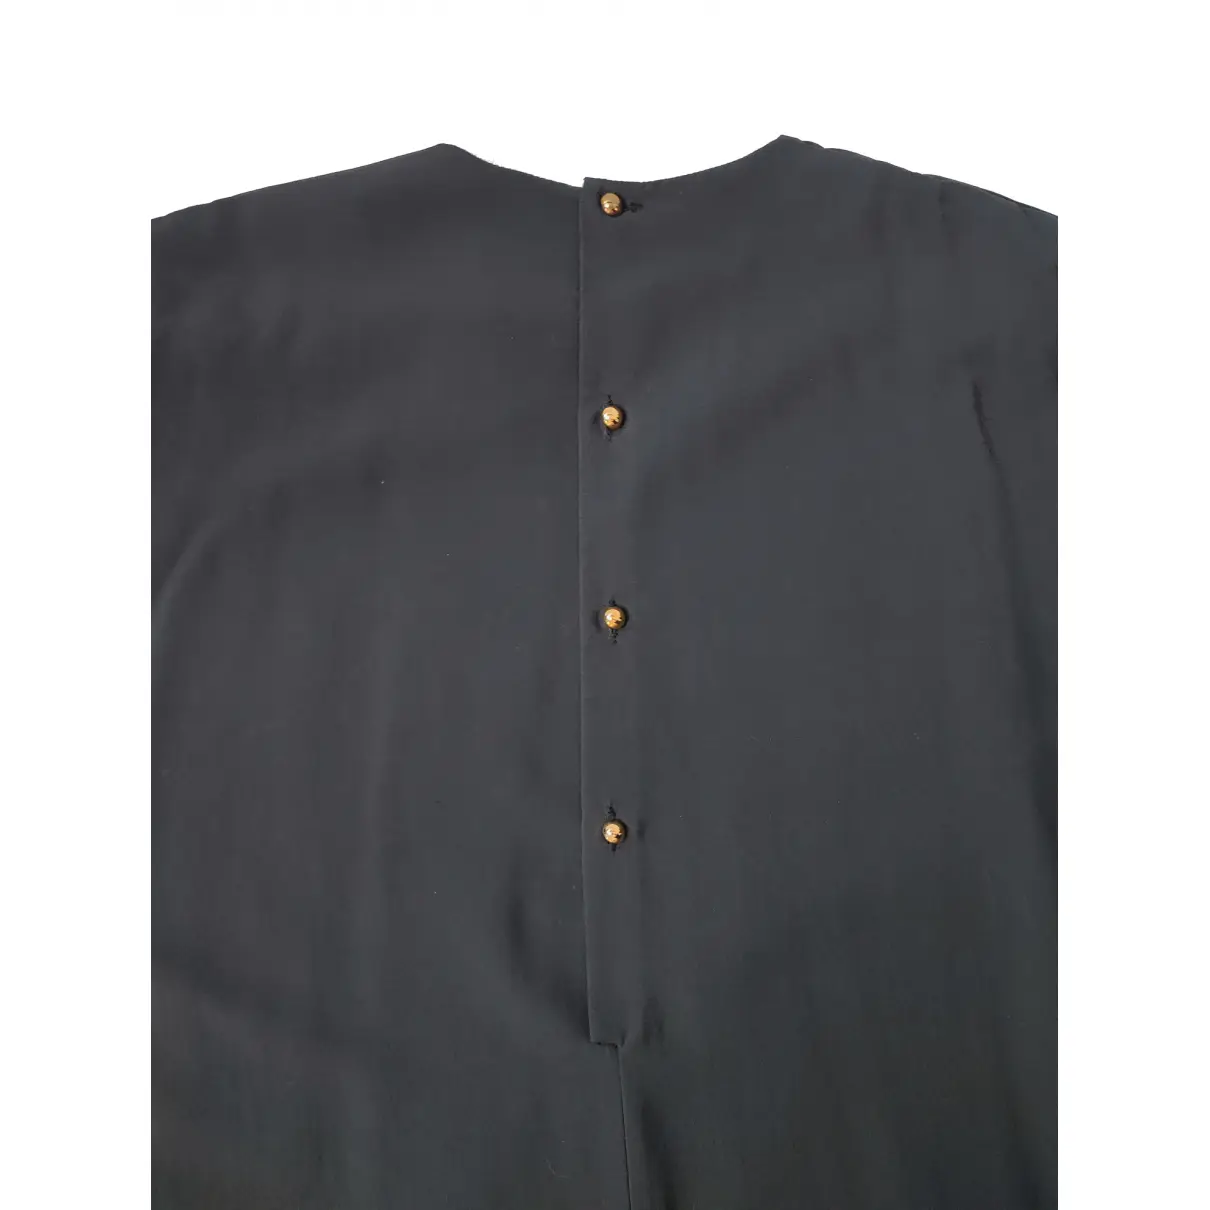 Mid-length dress Pierre Cardin - Vintage